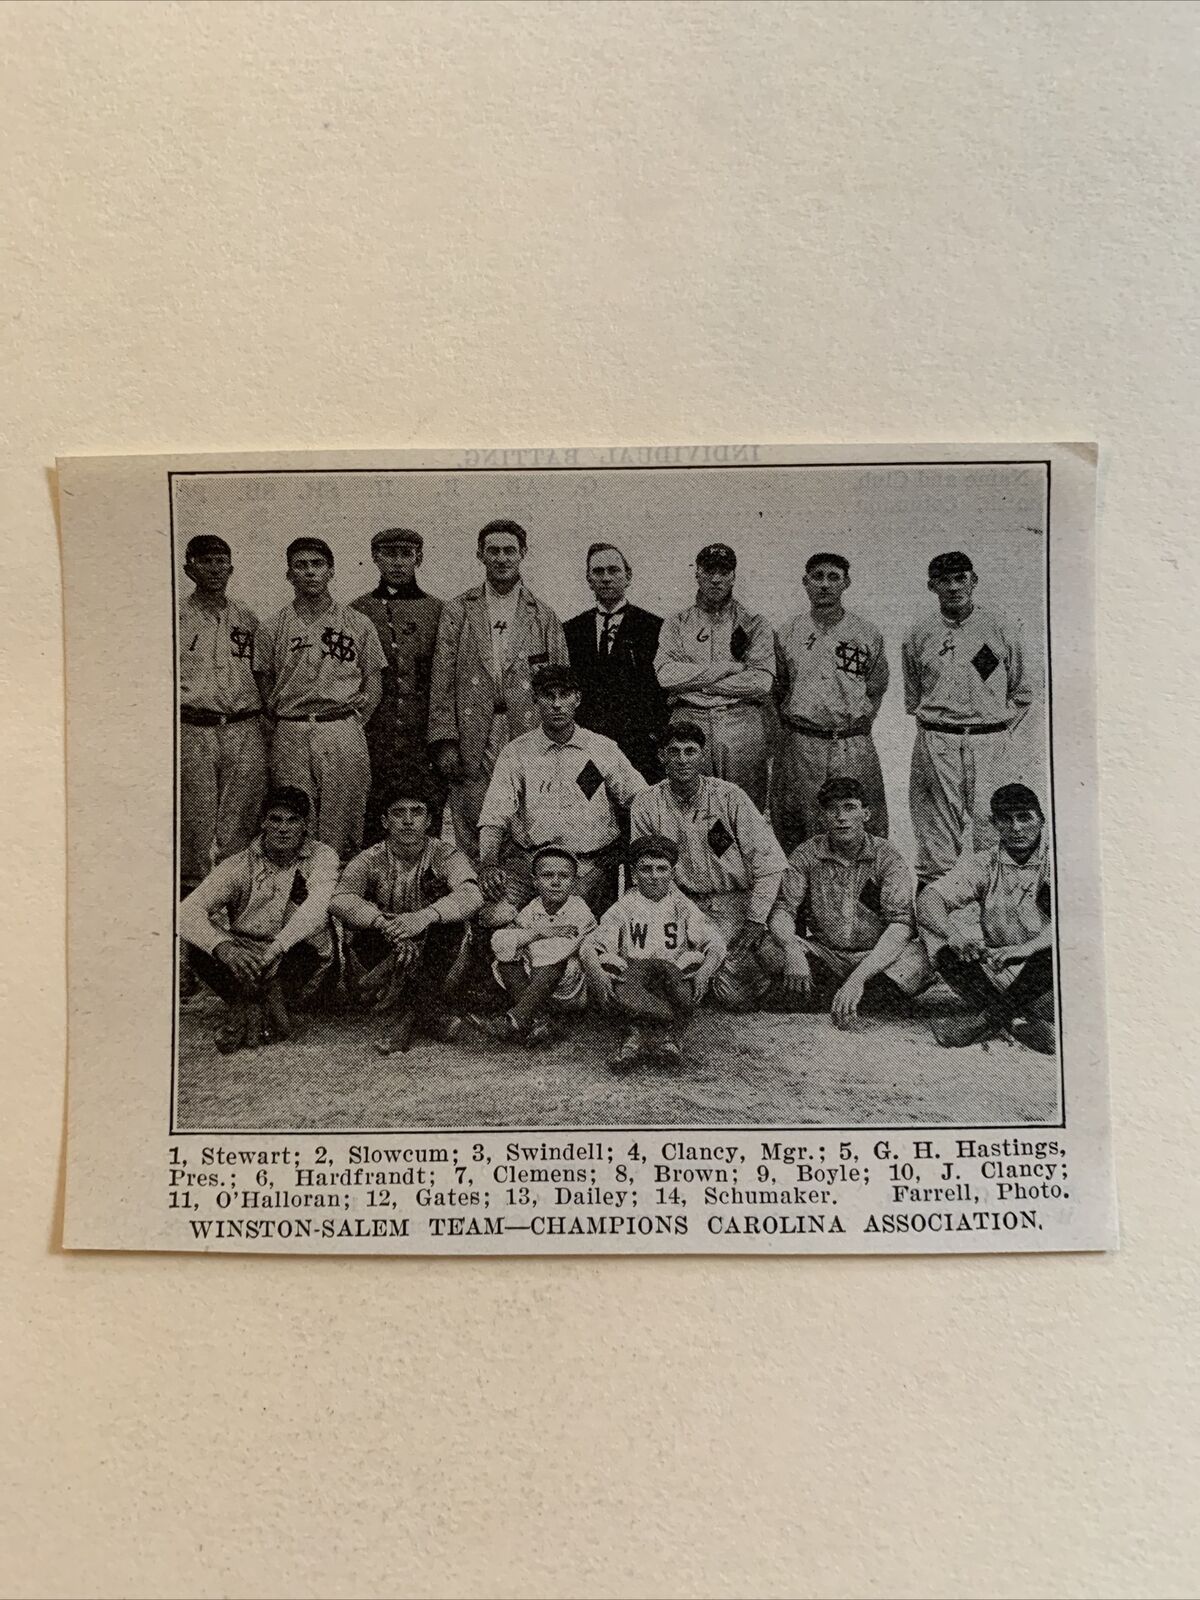 Winston-Salem Twins Carolina Association Champs 1911 Baseball Team Picture